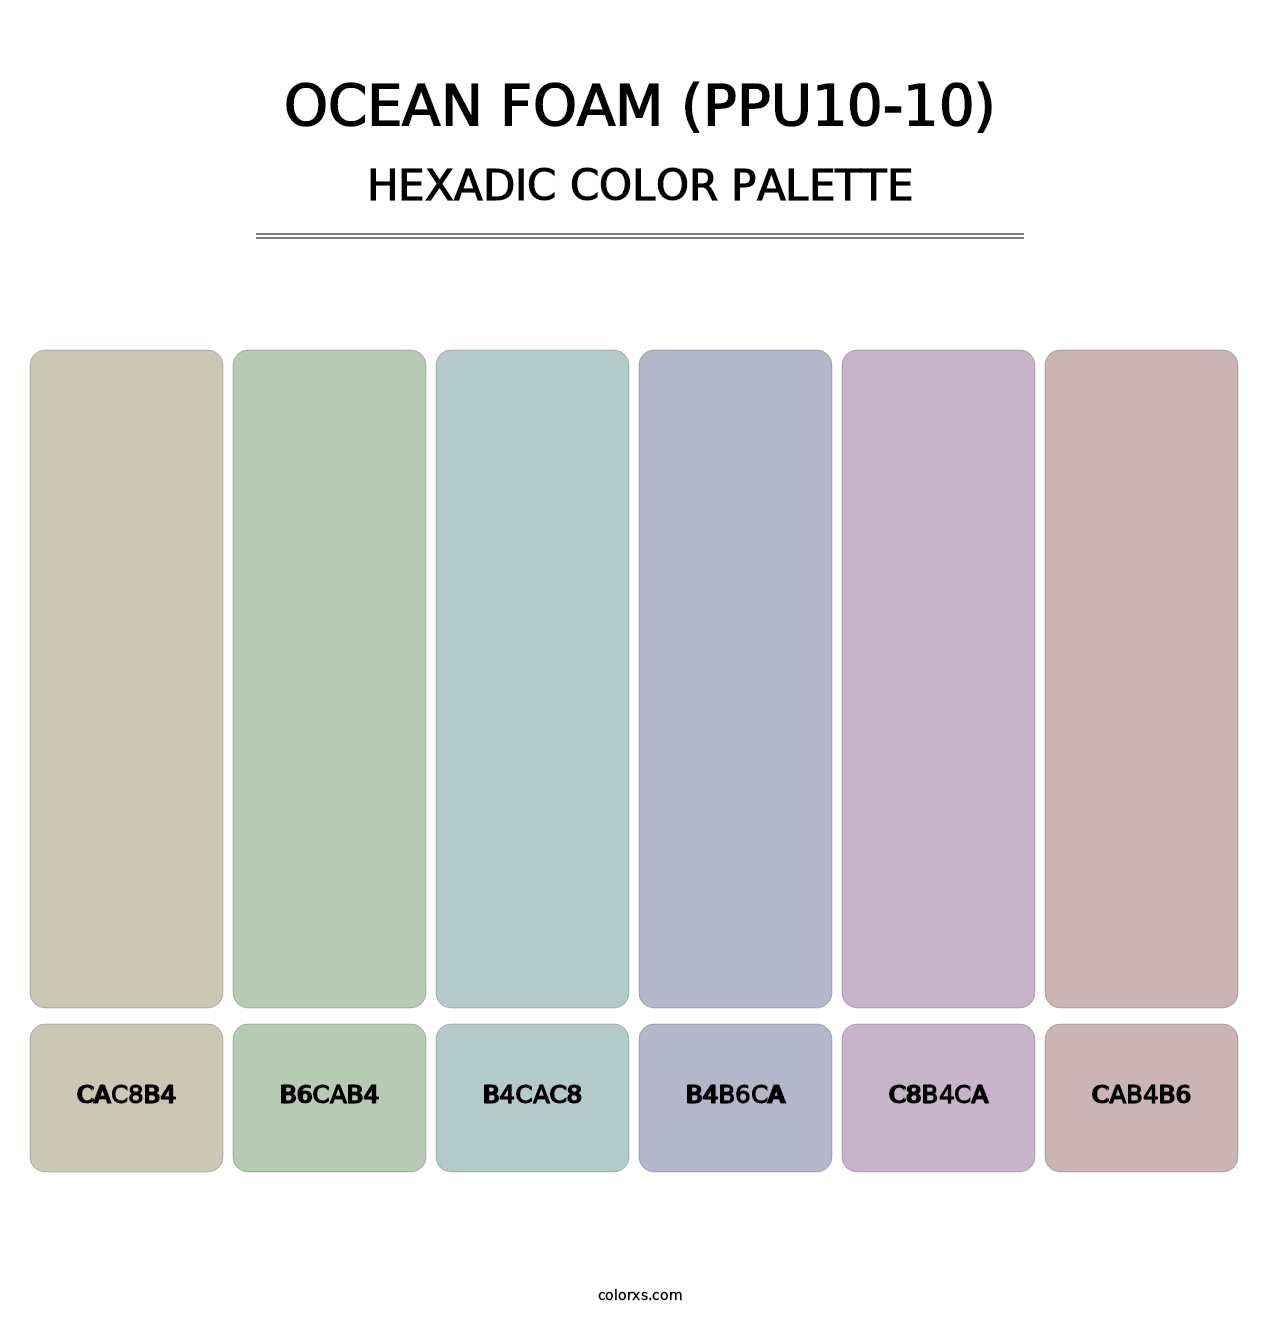 Ocean Foam (PPU10-10) - Hexadic Color Palette